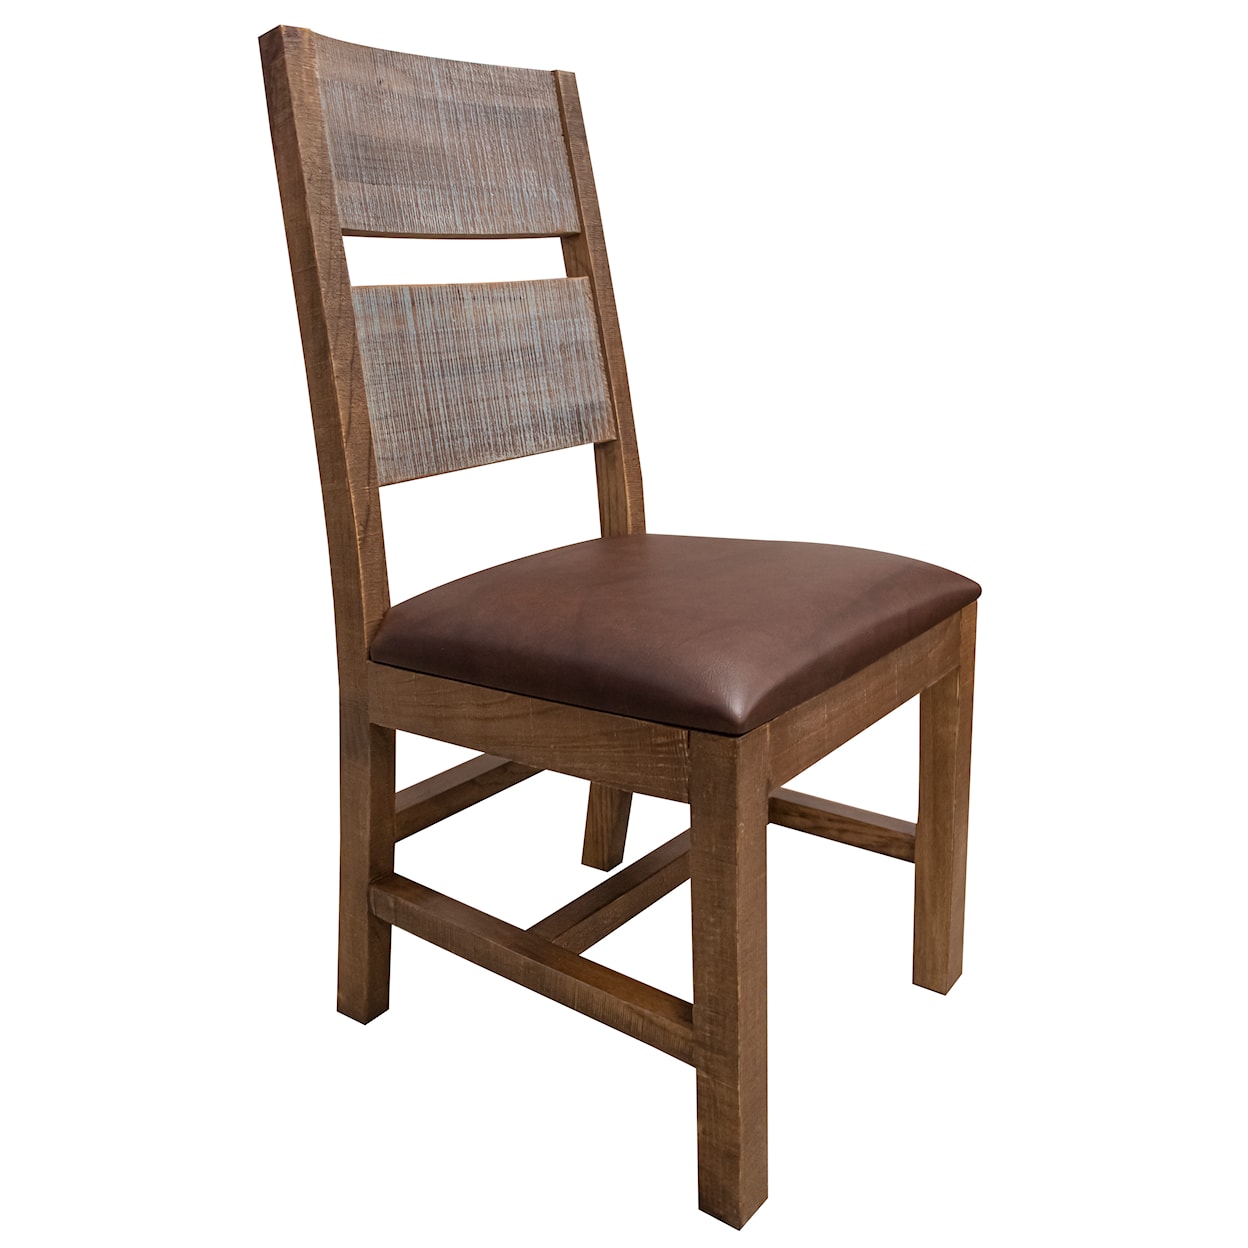 IFD International Furniture Direct 900 Antique Chair